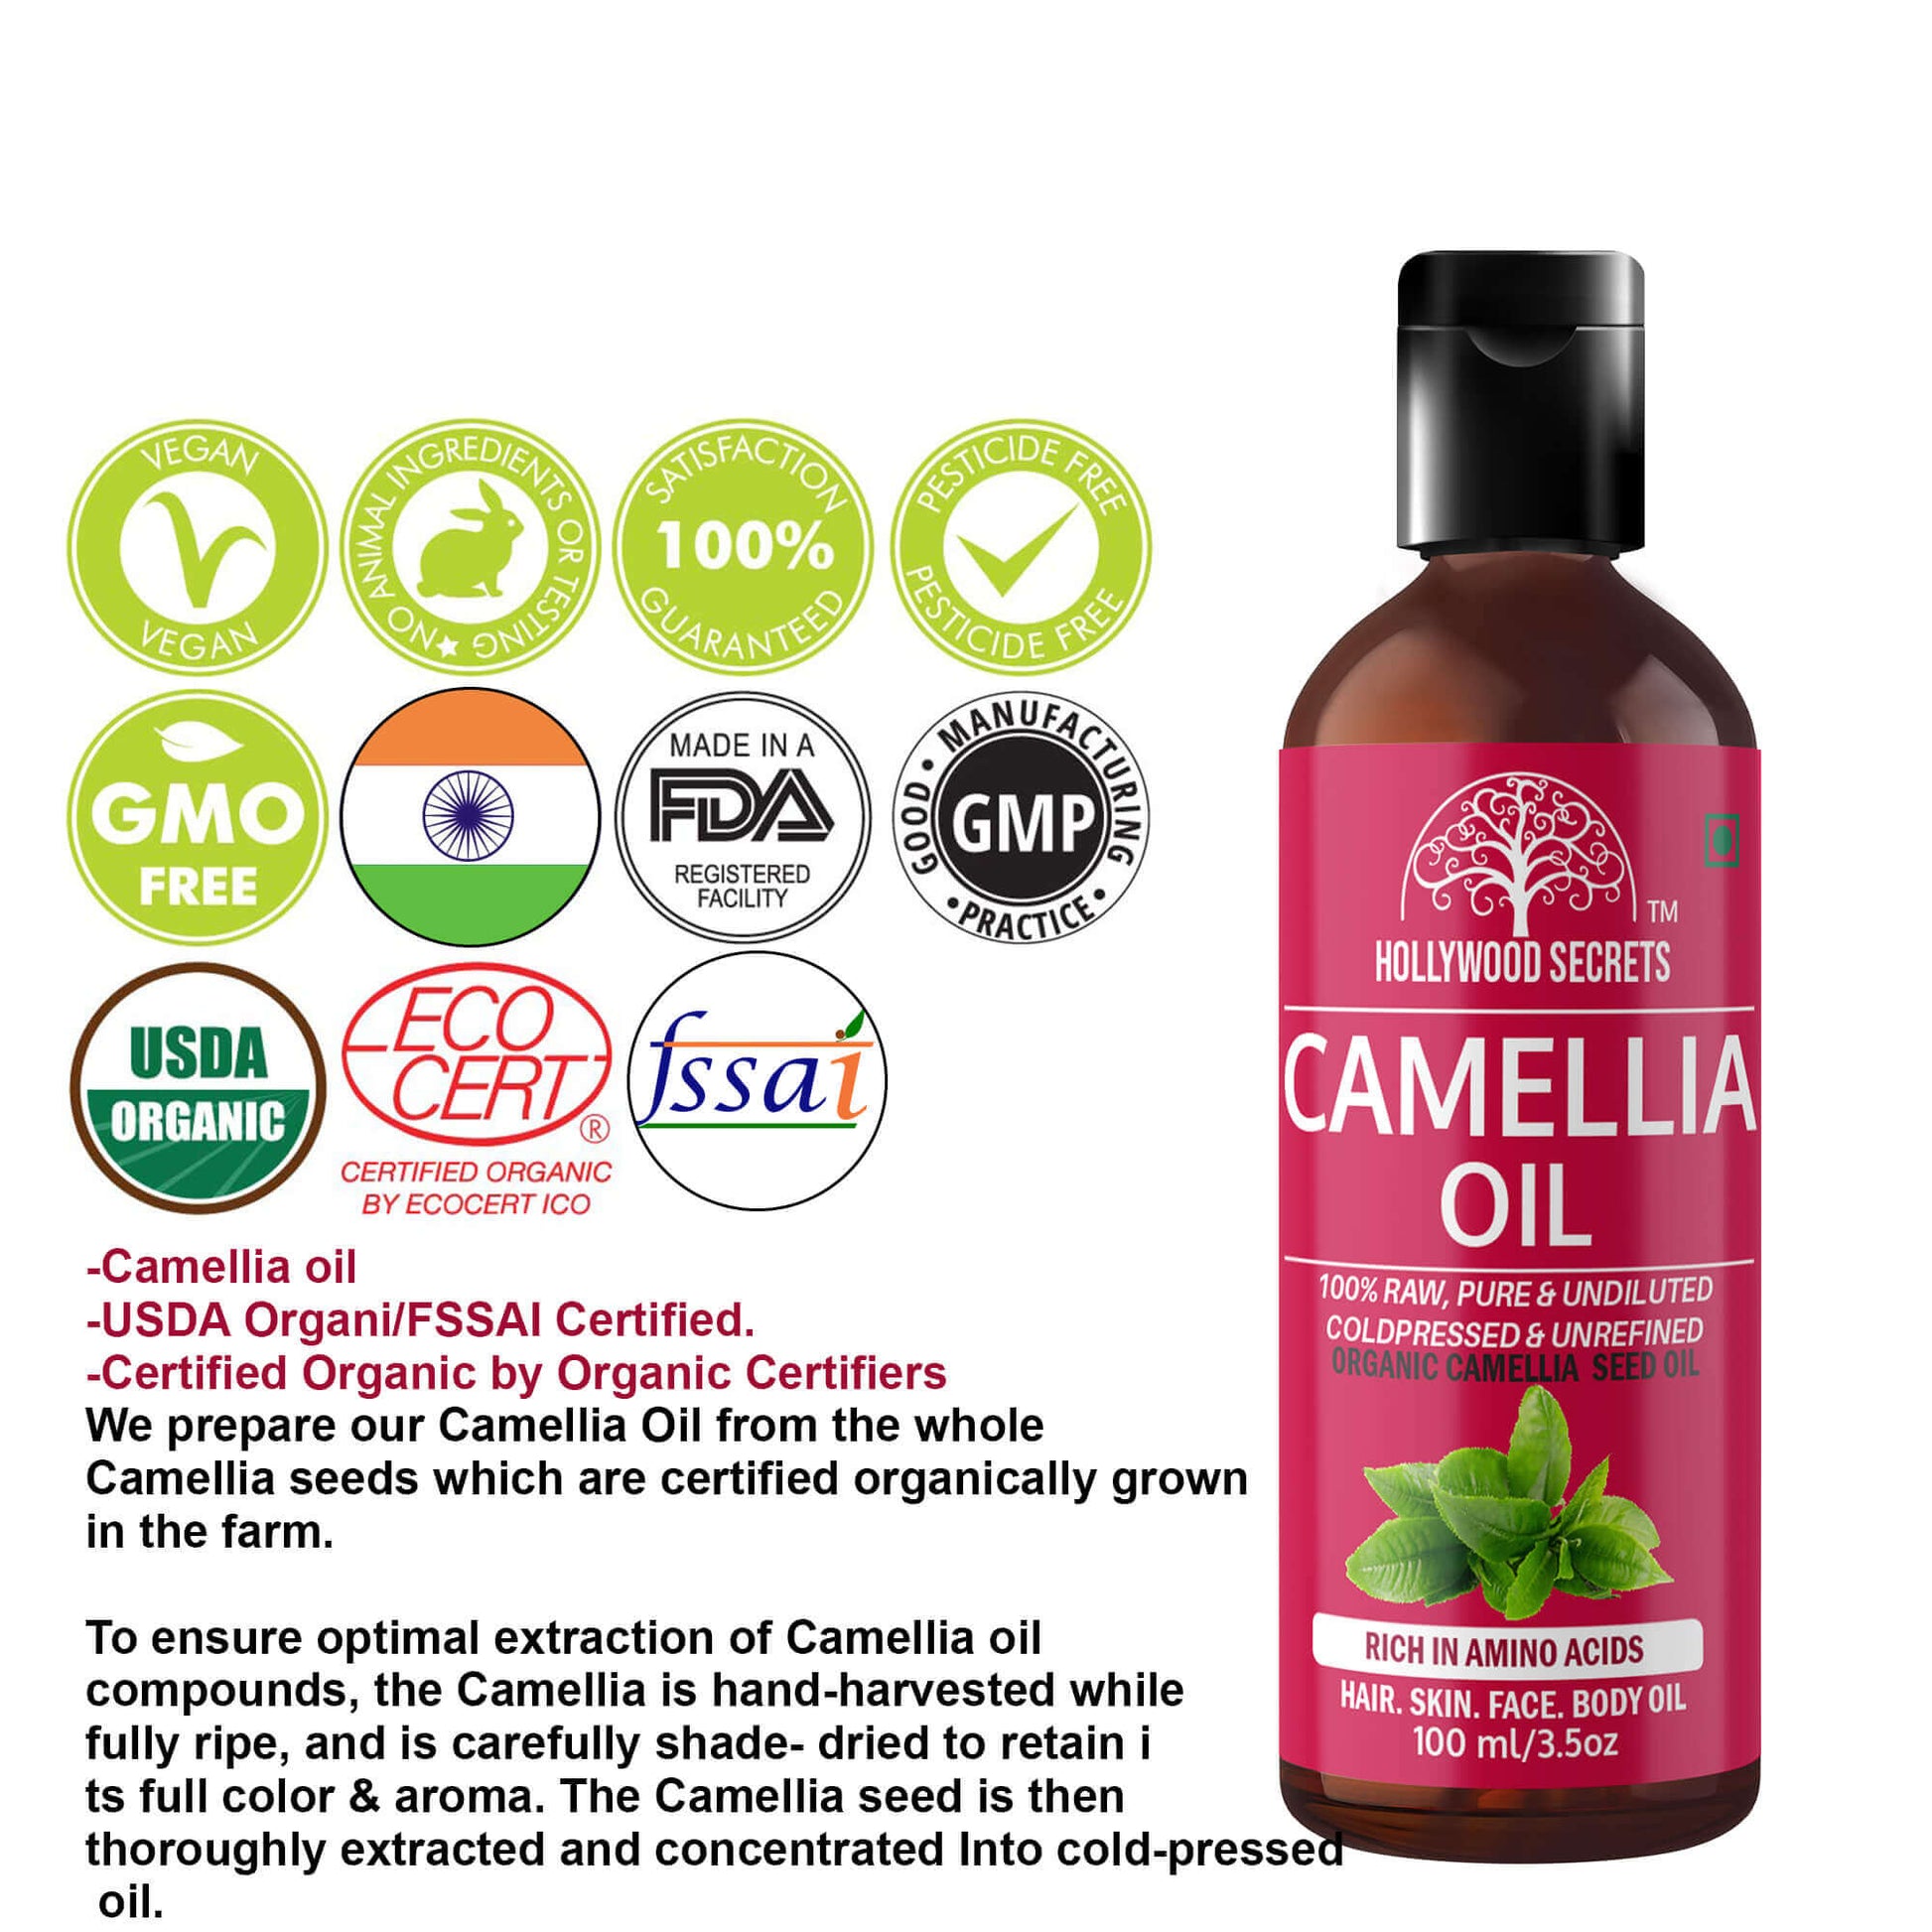 Camellia Oil Pure Cold Pressed 100ml Hollywood Secrets